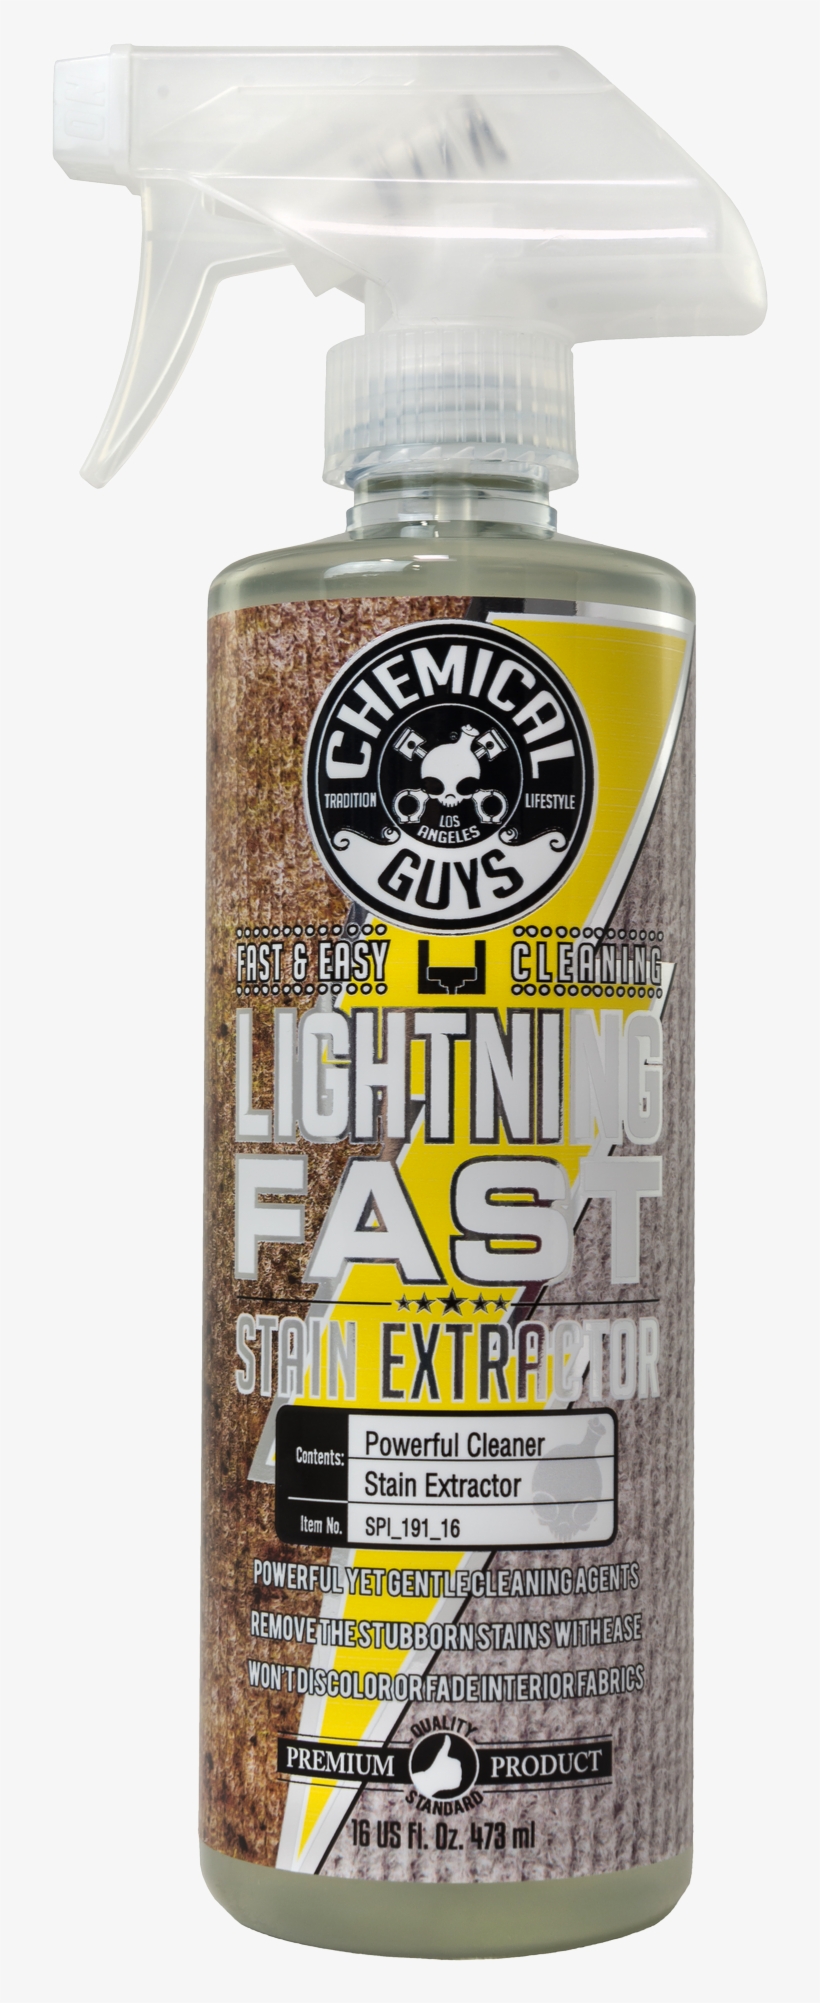 Lightning Fast Chemical Guys, transparent png #9111324